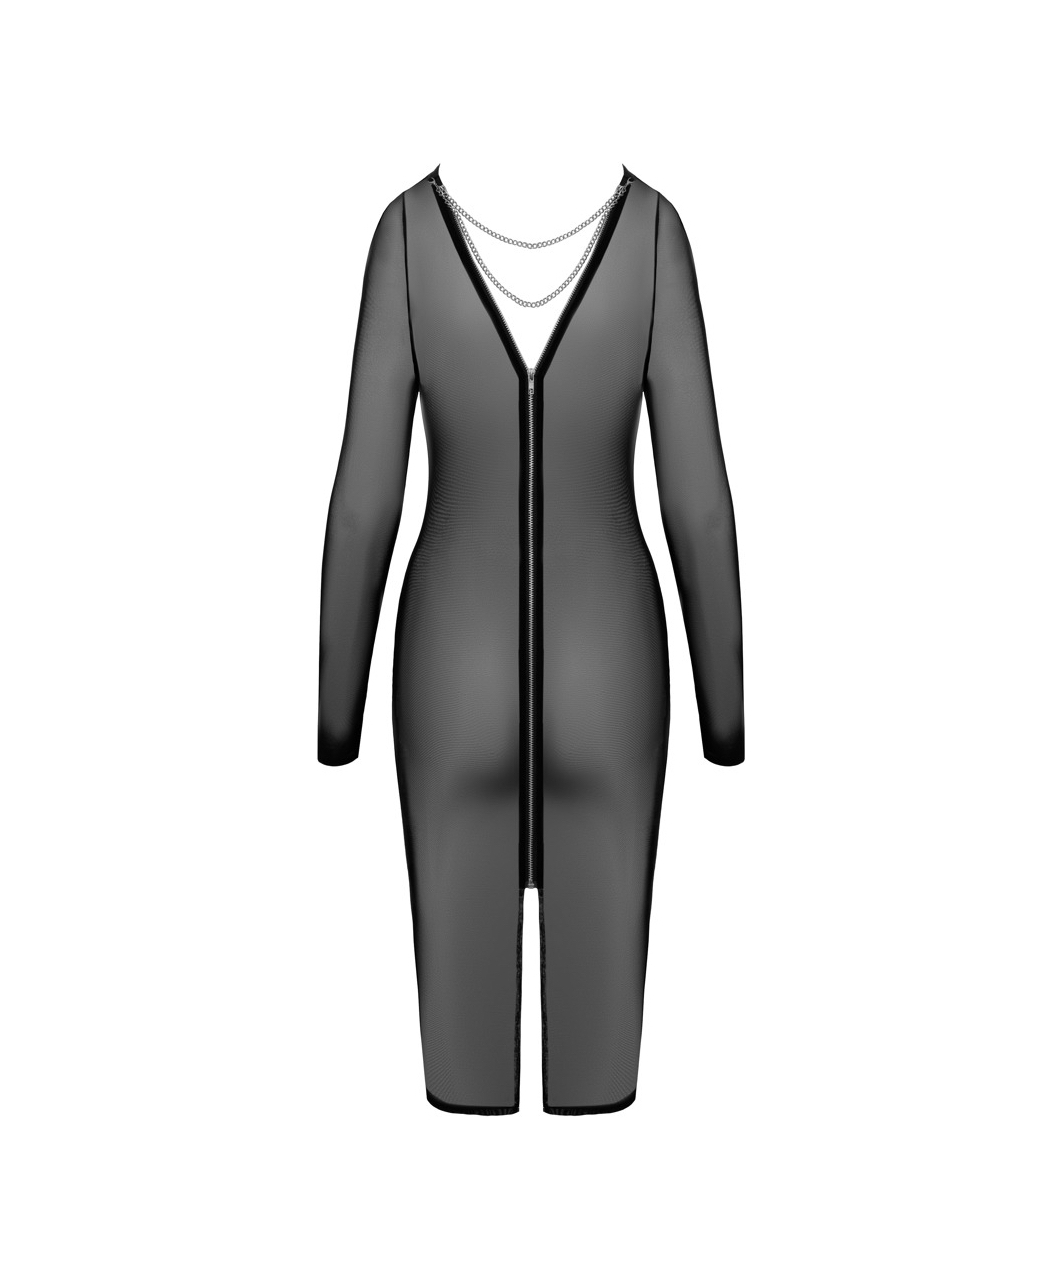 Cottelli Lingerie black sheer mesh dress with back zipper & chains